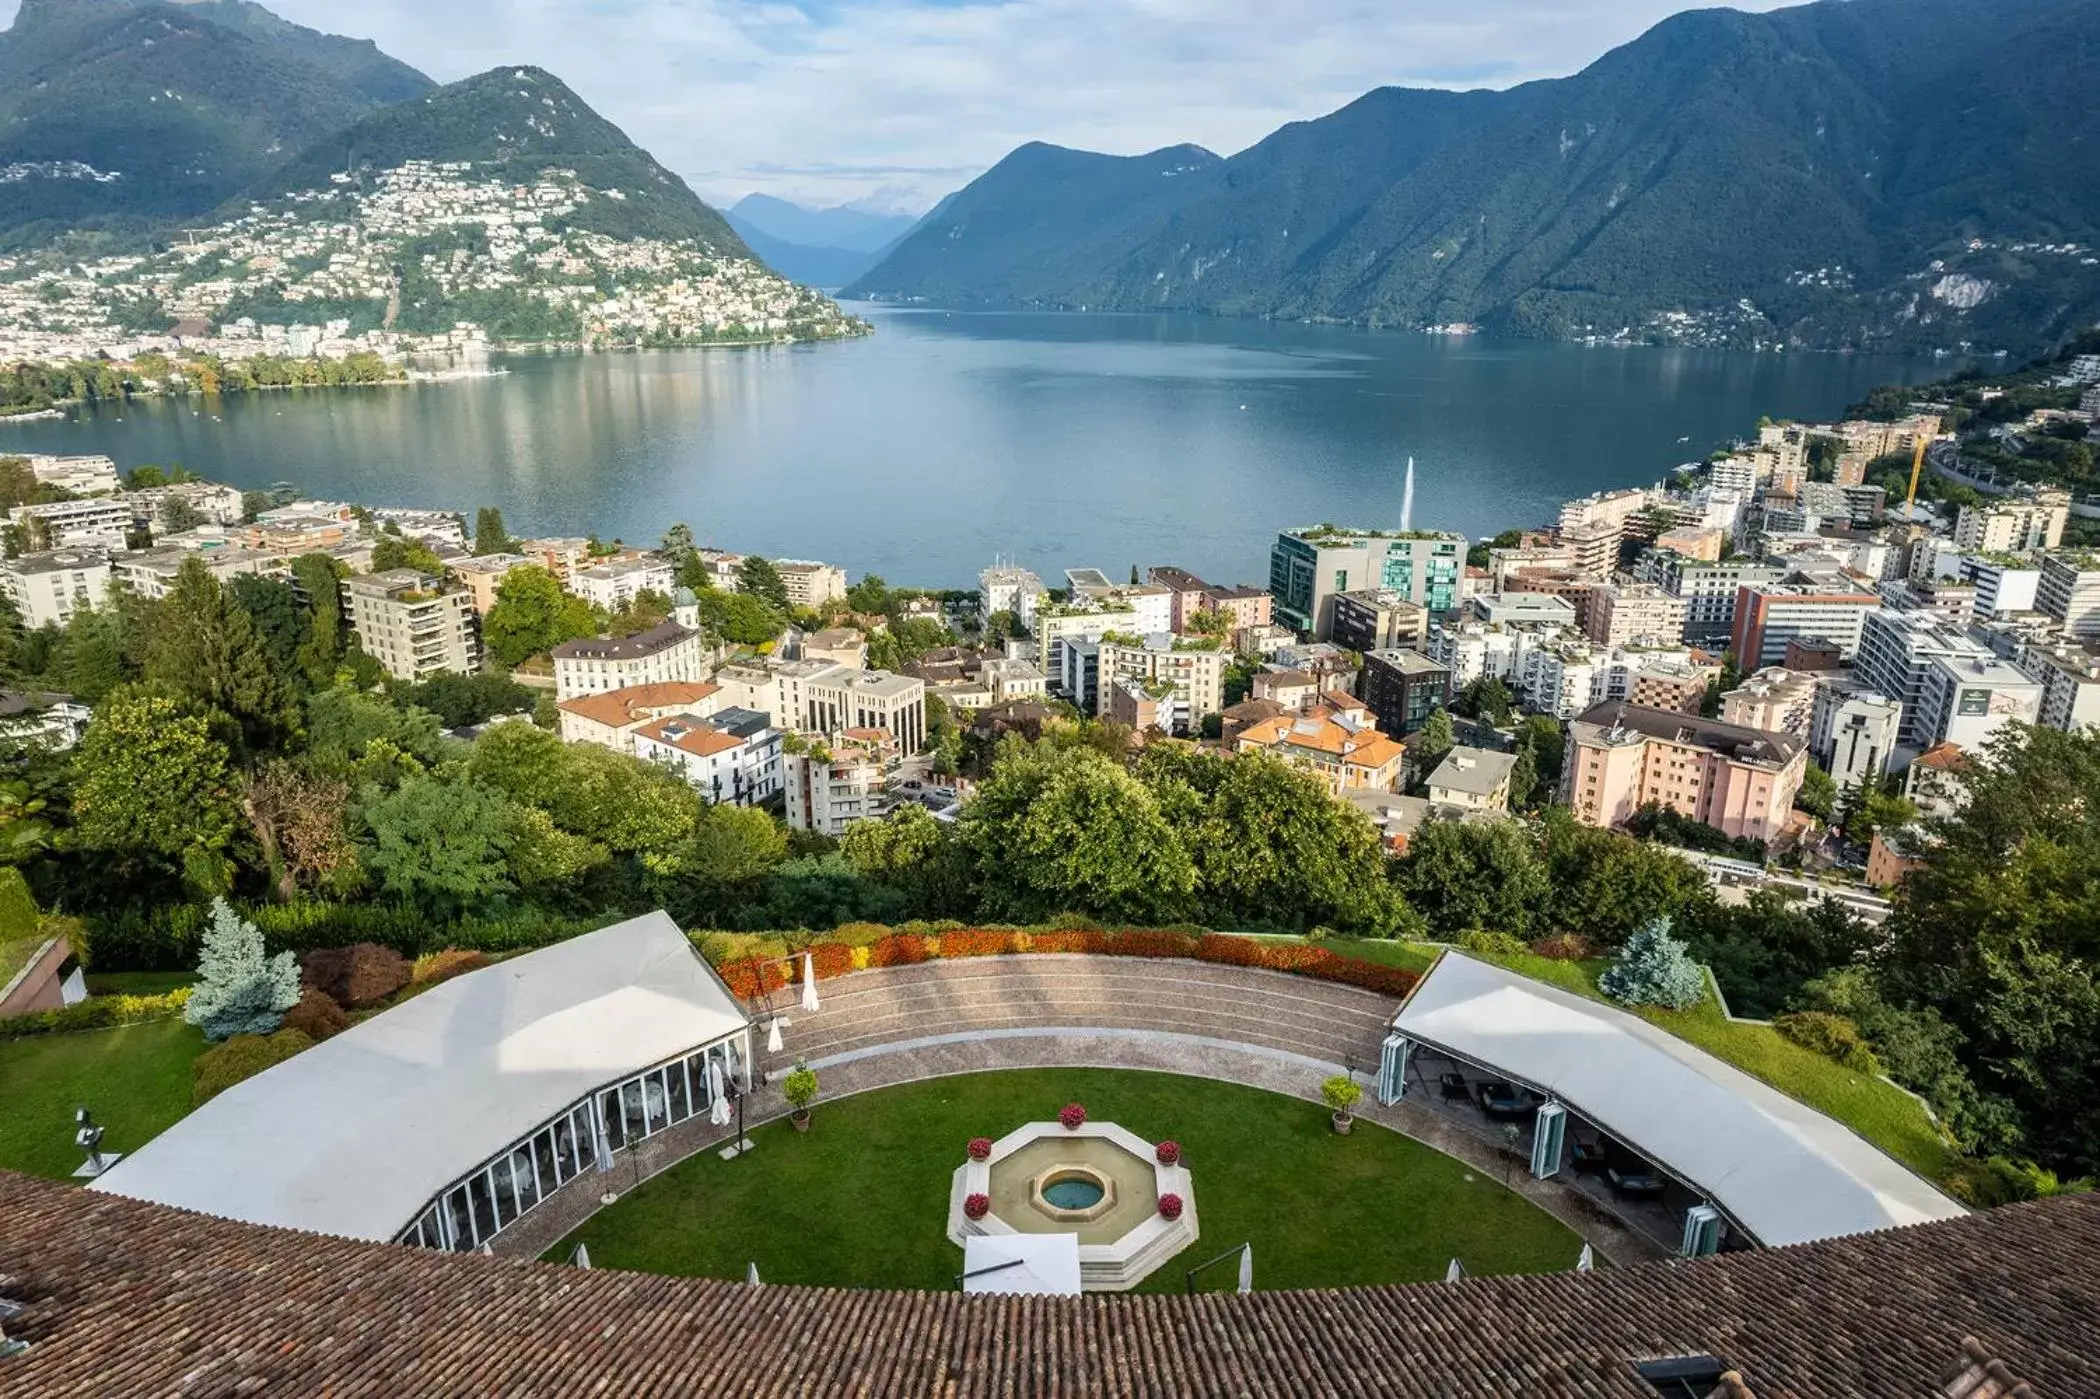 Lake view, Bird's-eye View in Villa Principe Leopoldo - Ticino Hotels Group